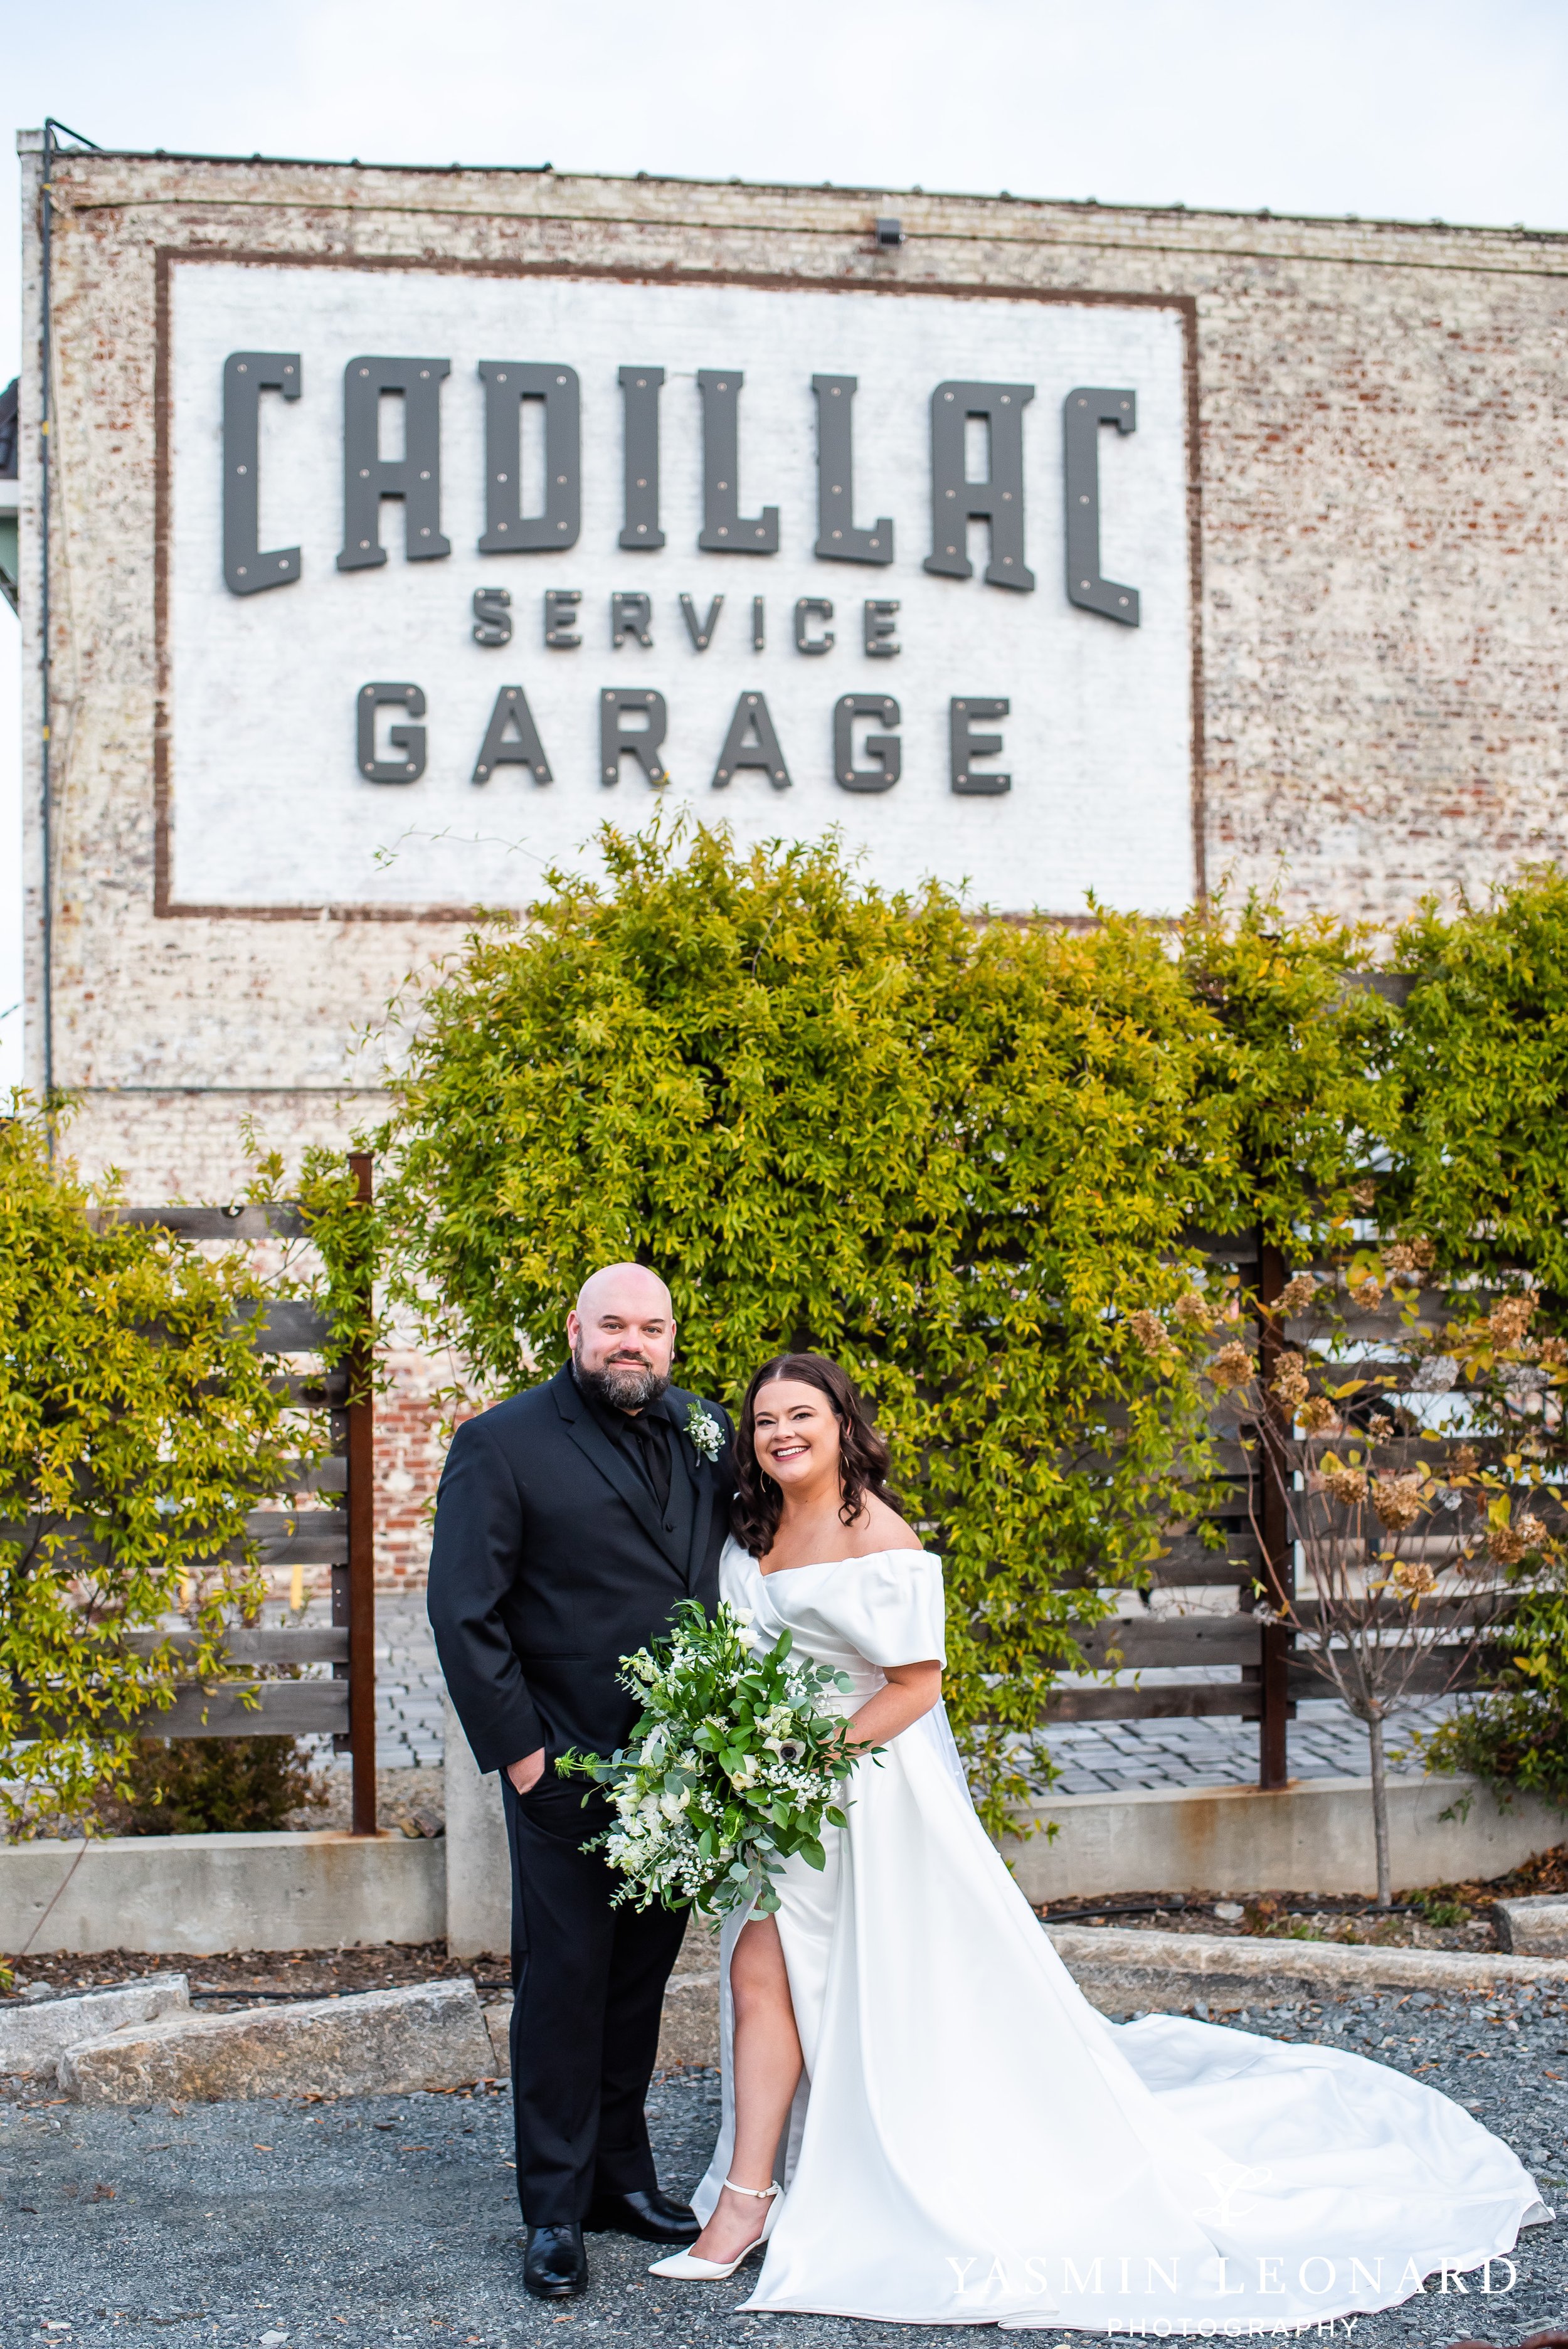 Sam and Gates - Cadillac Service Garage - Greensboro Wedding Venue - High Point Wedding Photographer - Greensboro Photographer Near Me - Yasmin Leonard Photography-50.jpg